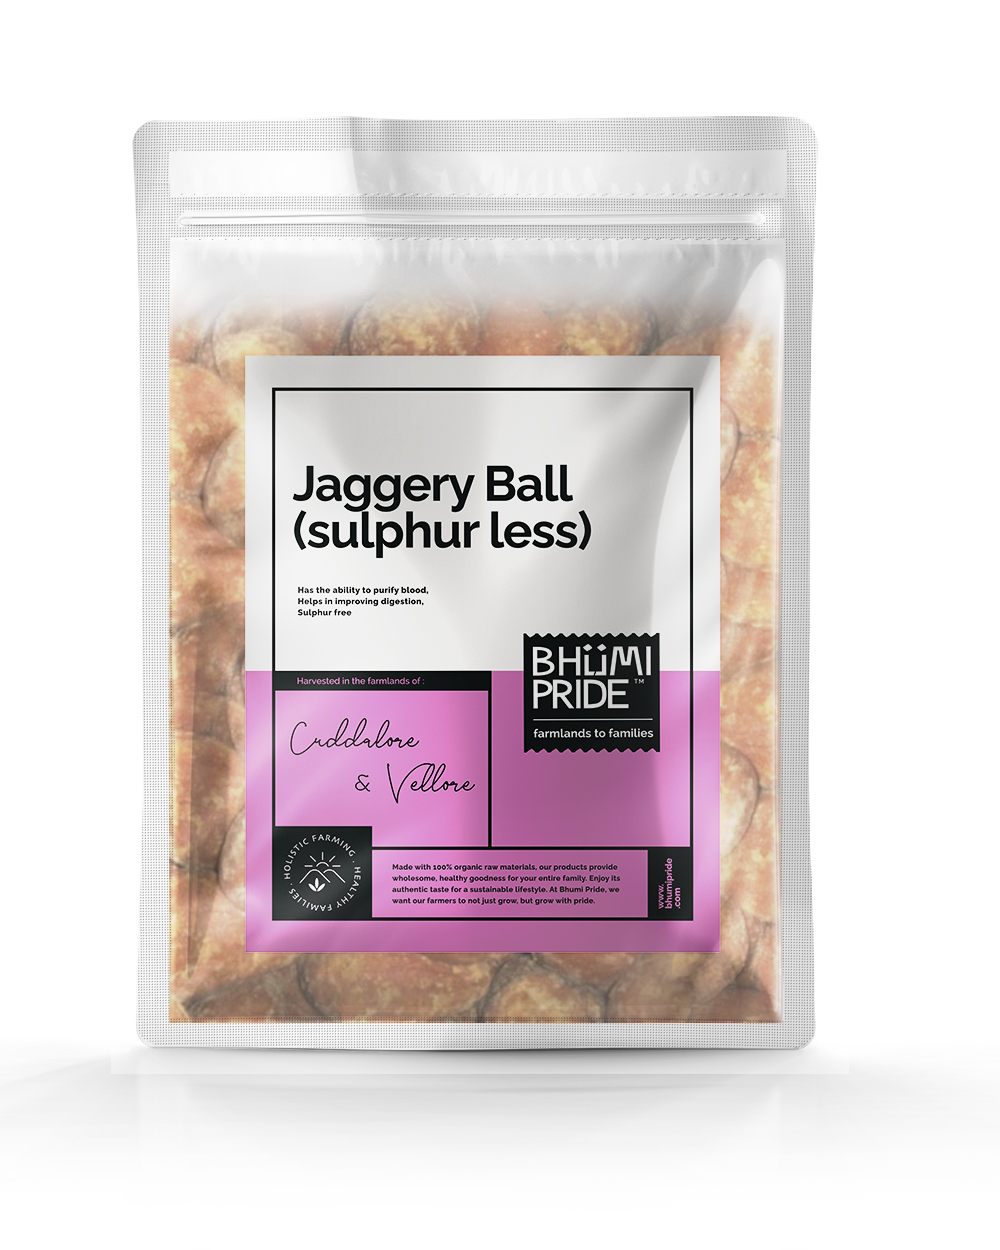 Jaggery Ball (sulphur less)